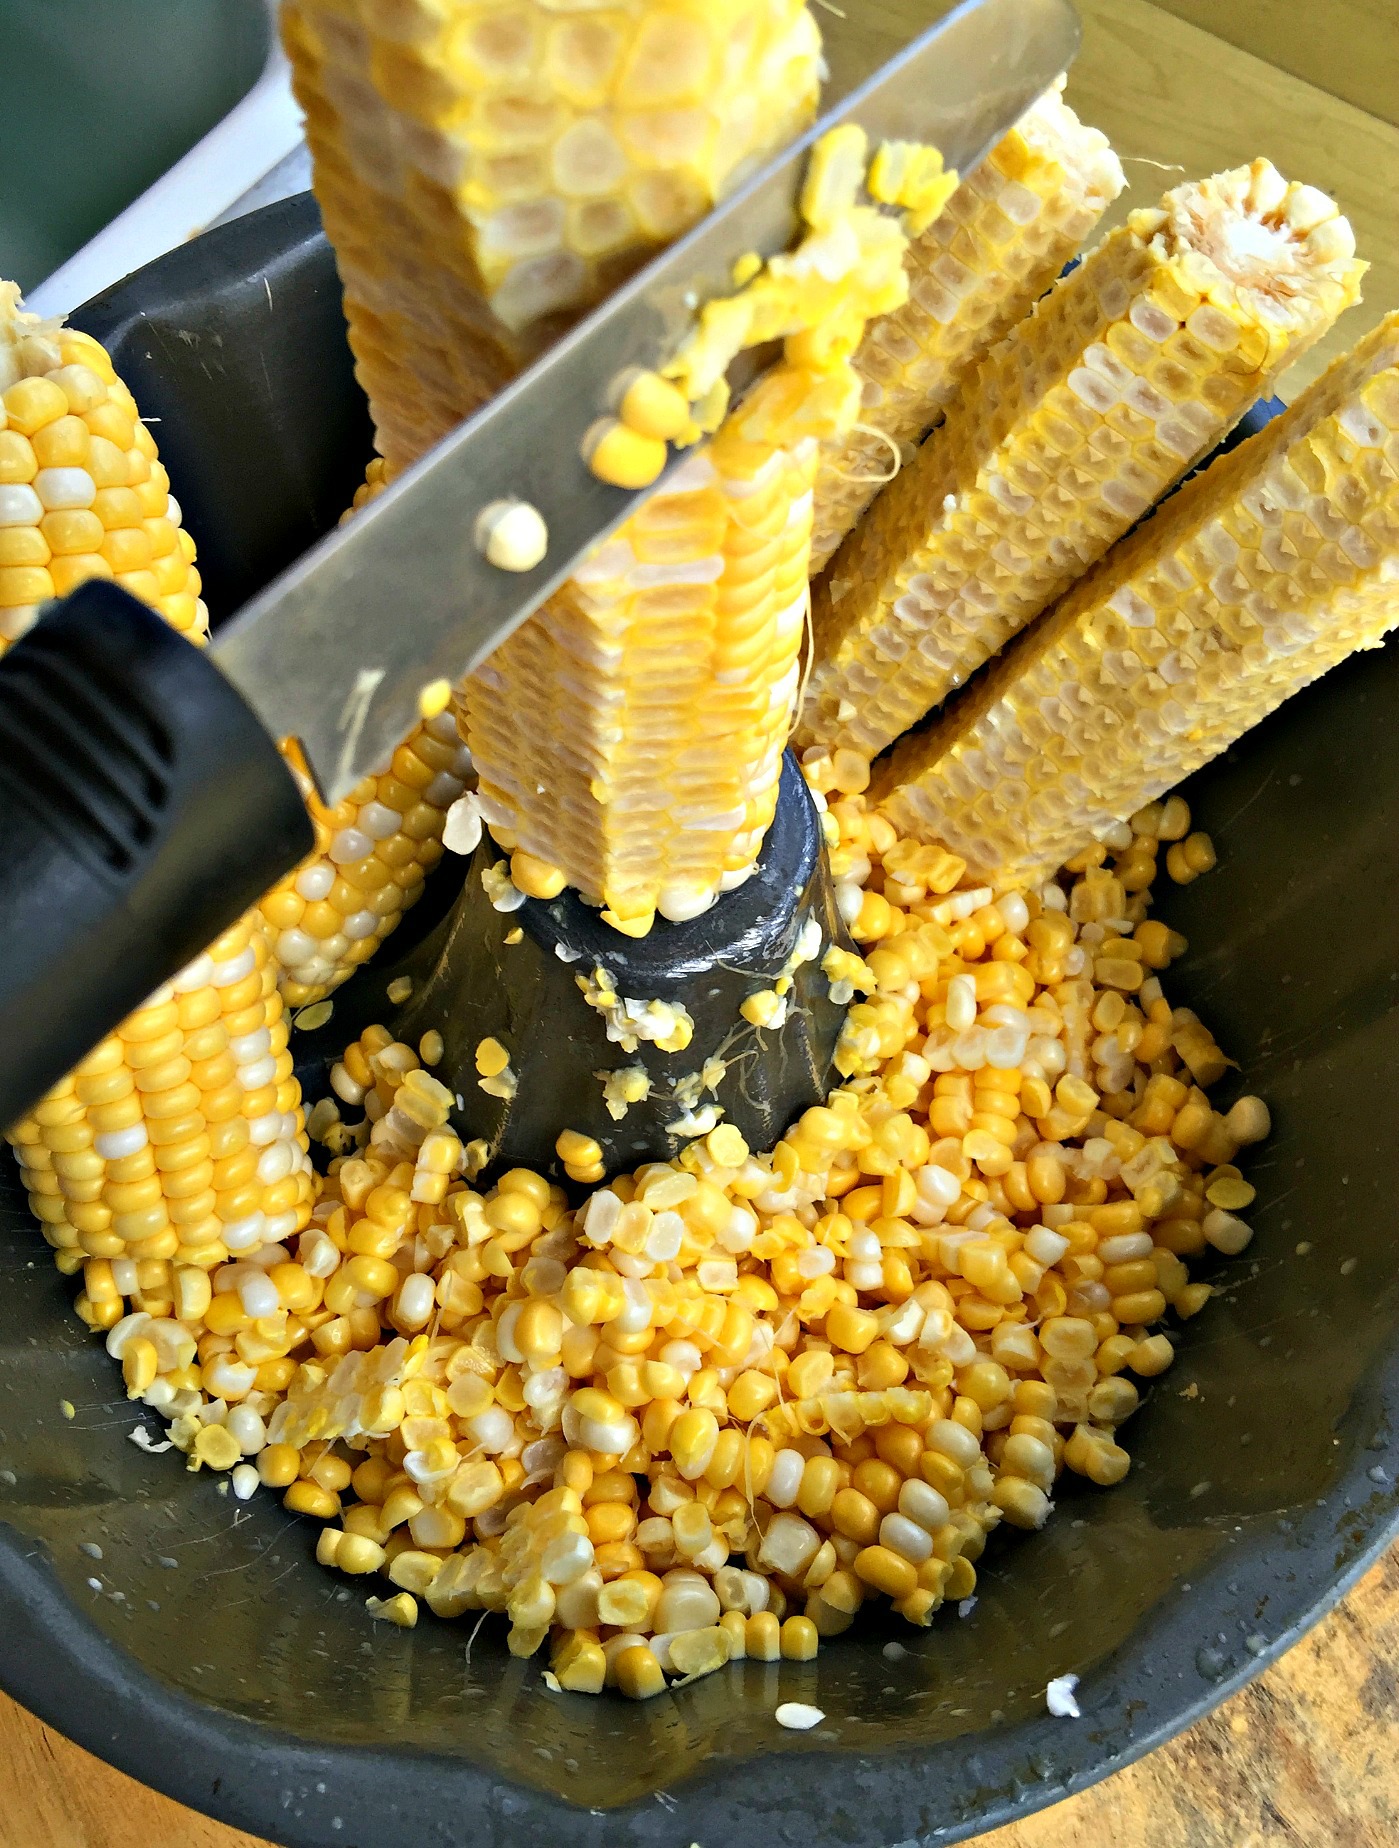 Cutting corn off the cob